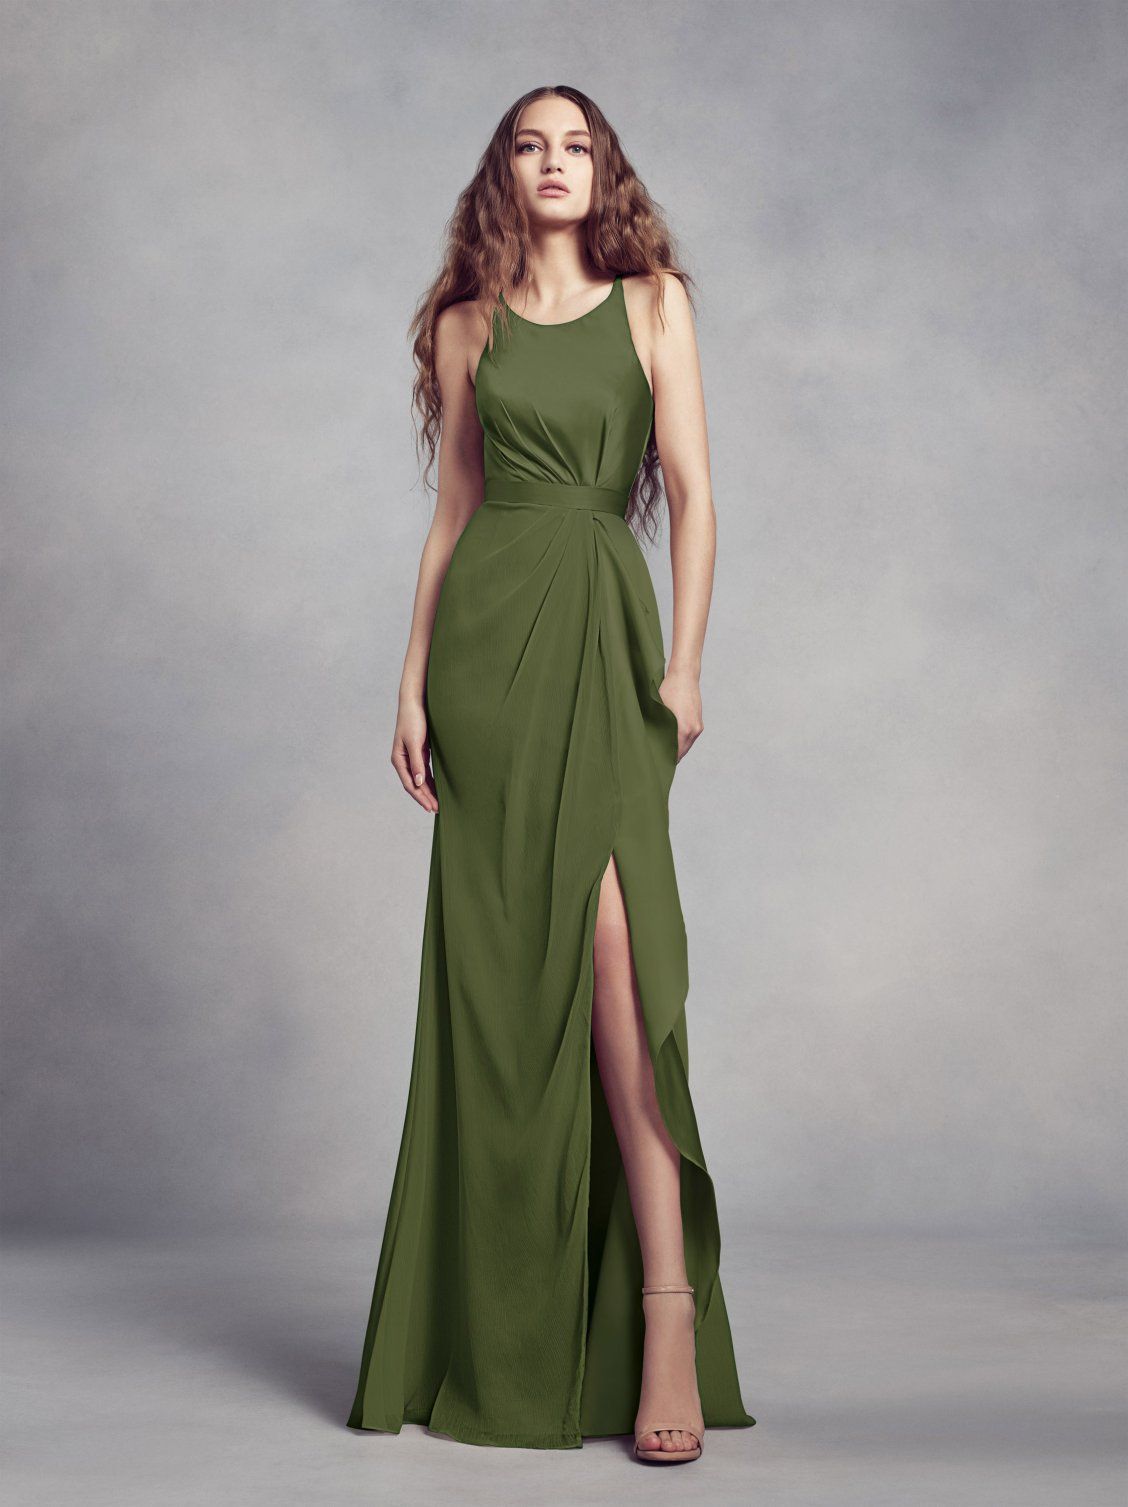 11 Beautiful and Stylish 2022 Party Dresses